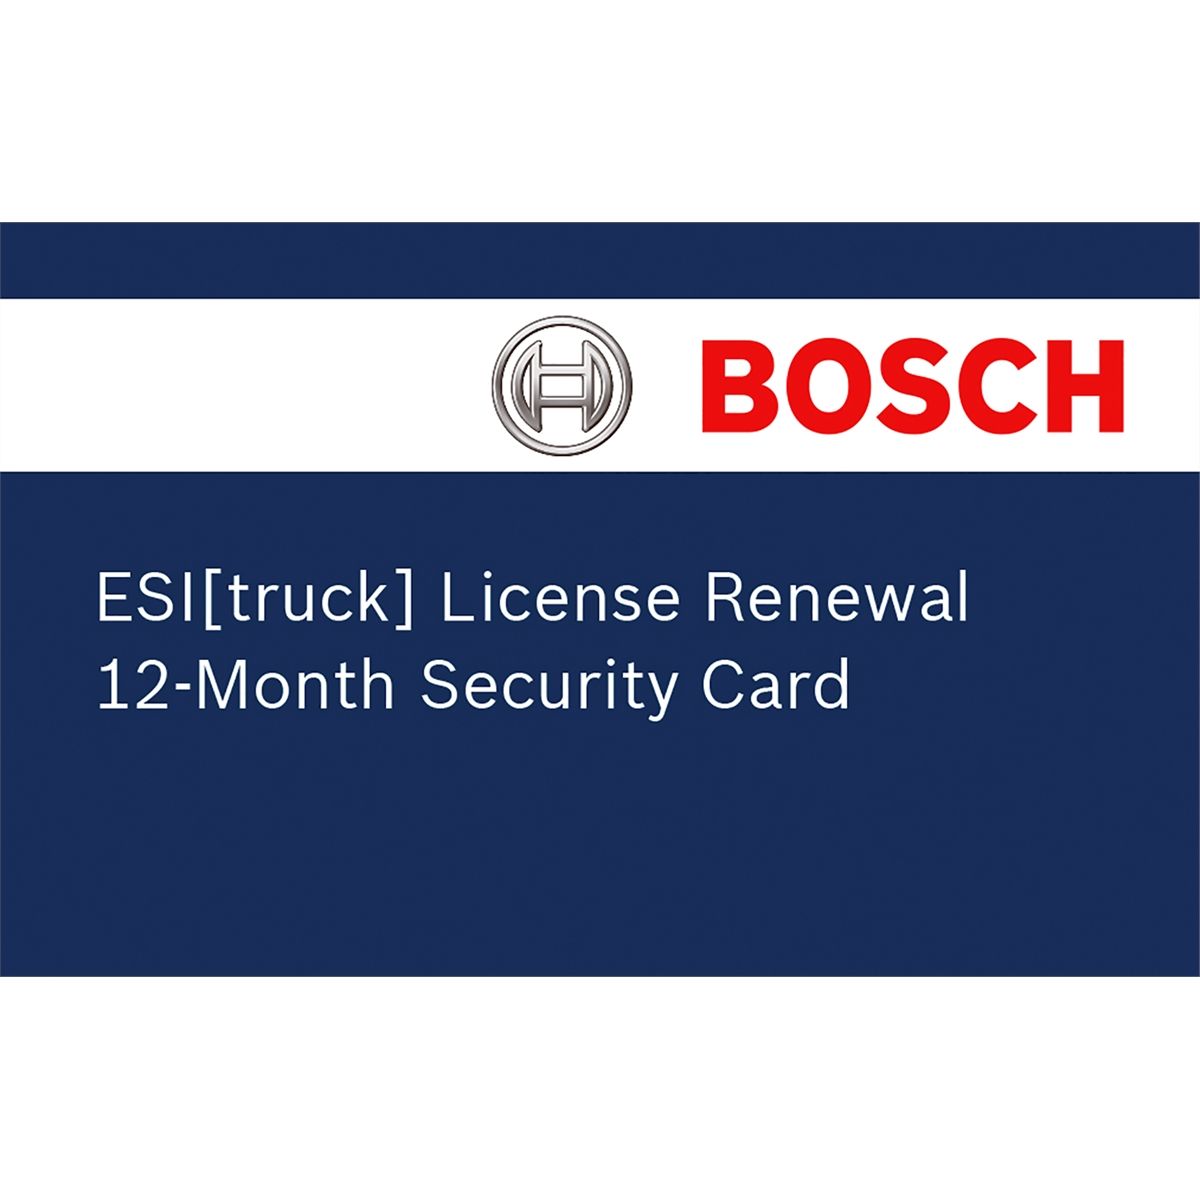 ESI Truck renewal license